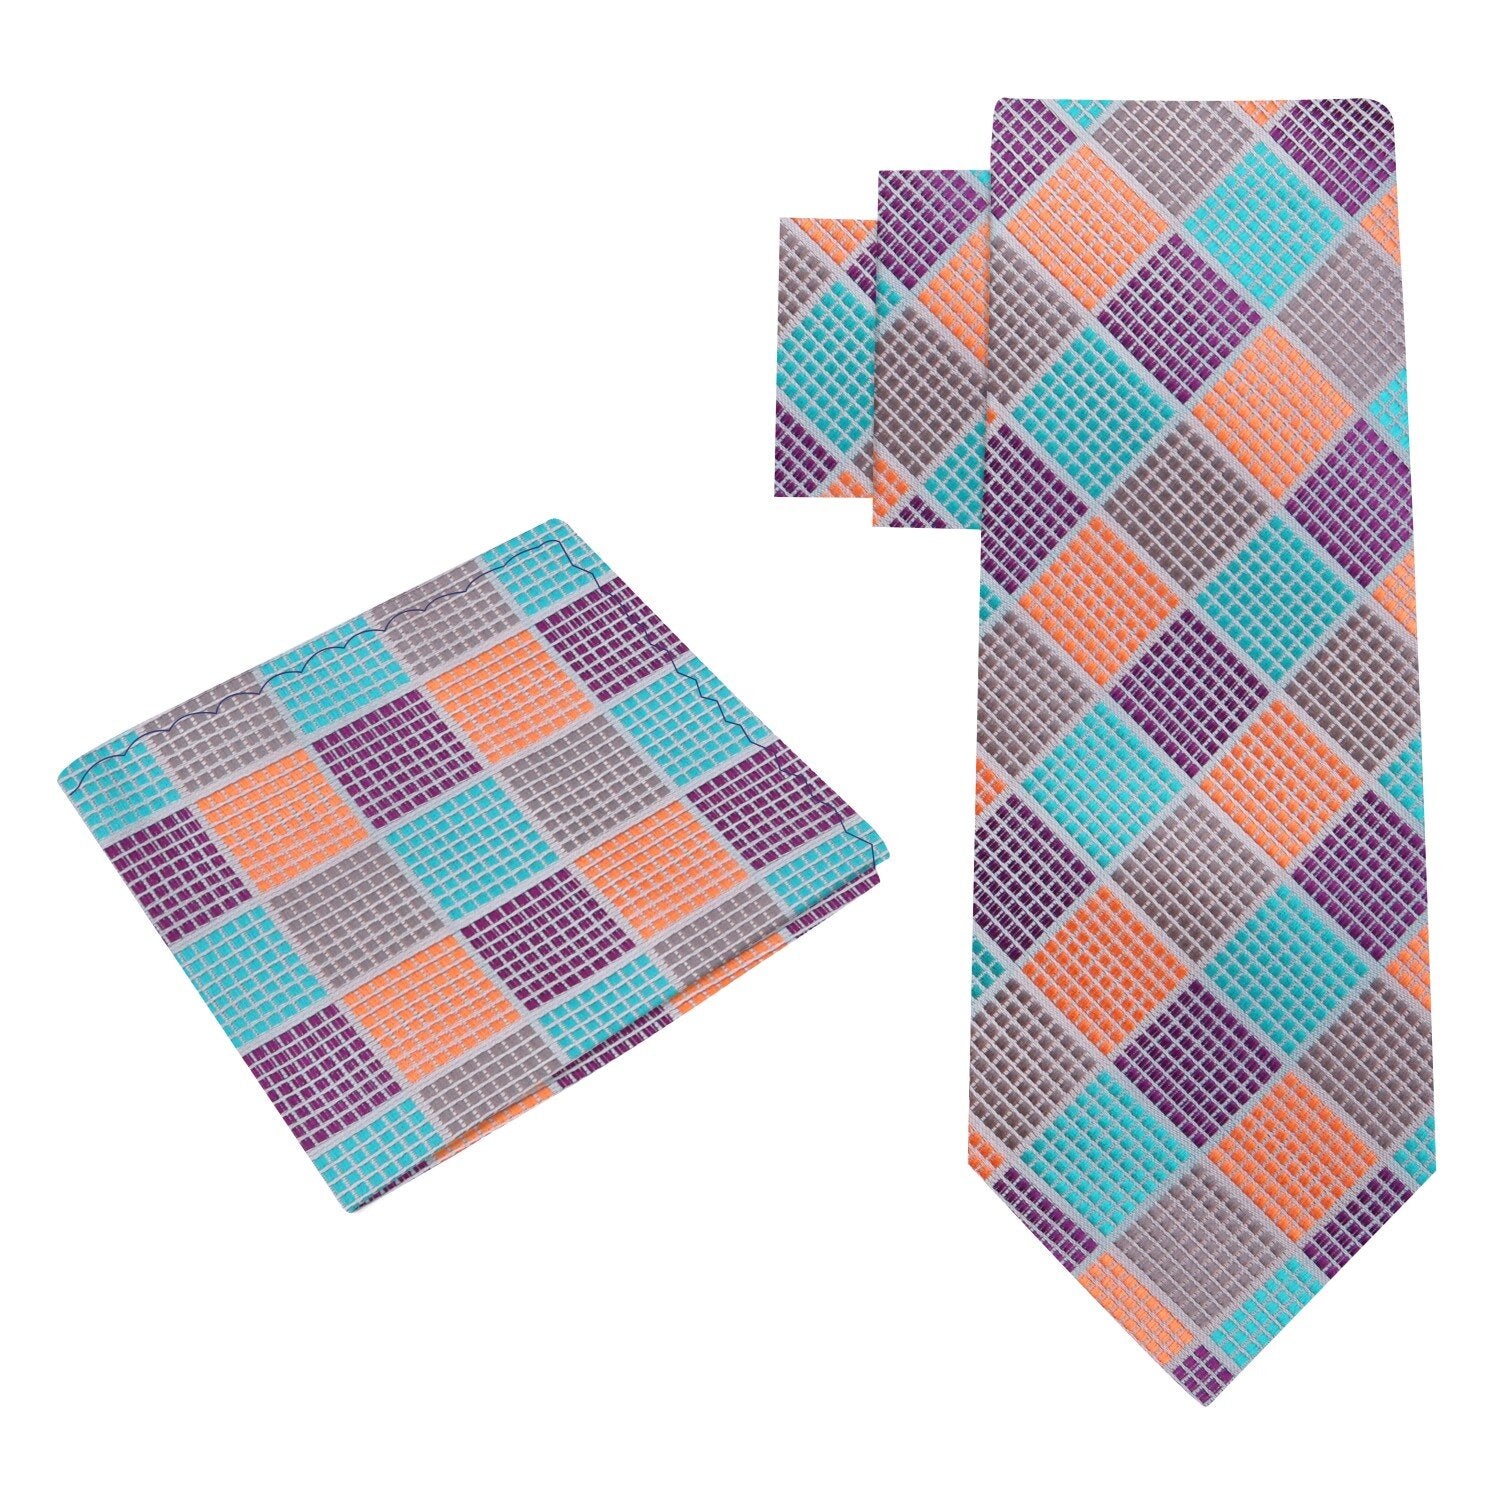 Alt View: Teal, Orange, Purple Diamonds Tie and Square